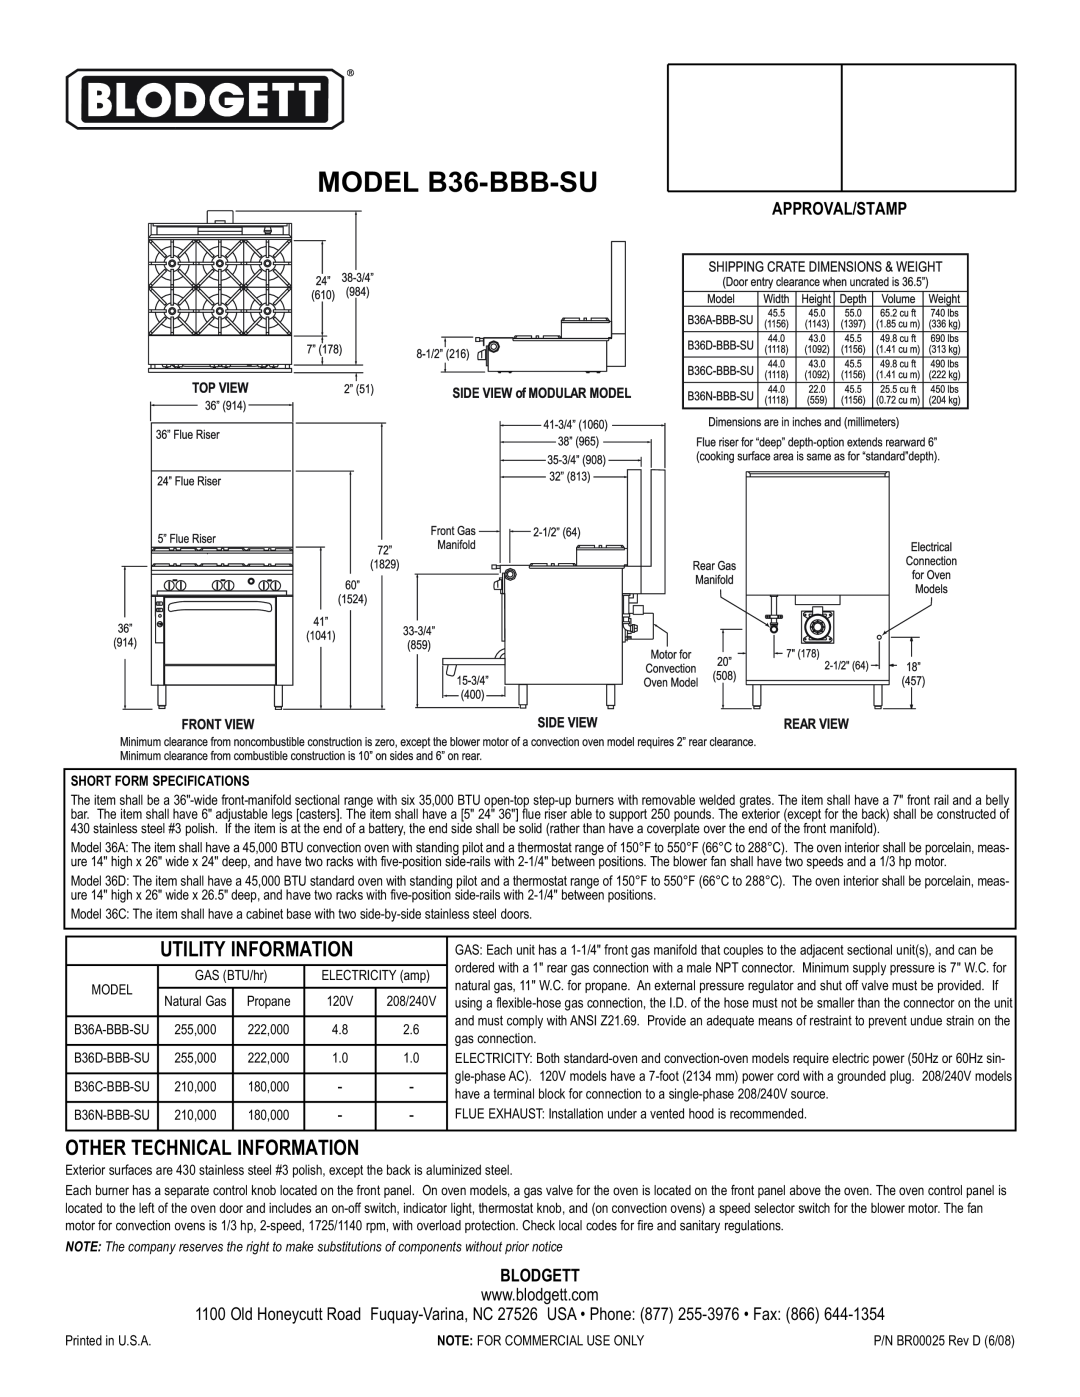 Blodgett B36- BBB-SU warranty MODEL B36-BBB-SU, Utility Information, Other Technical Information, Approval/Stamp, Blodgett 